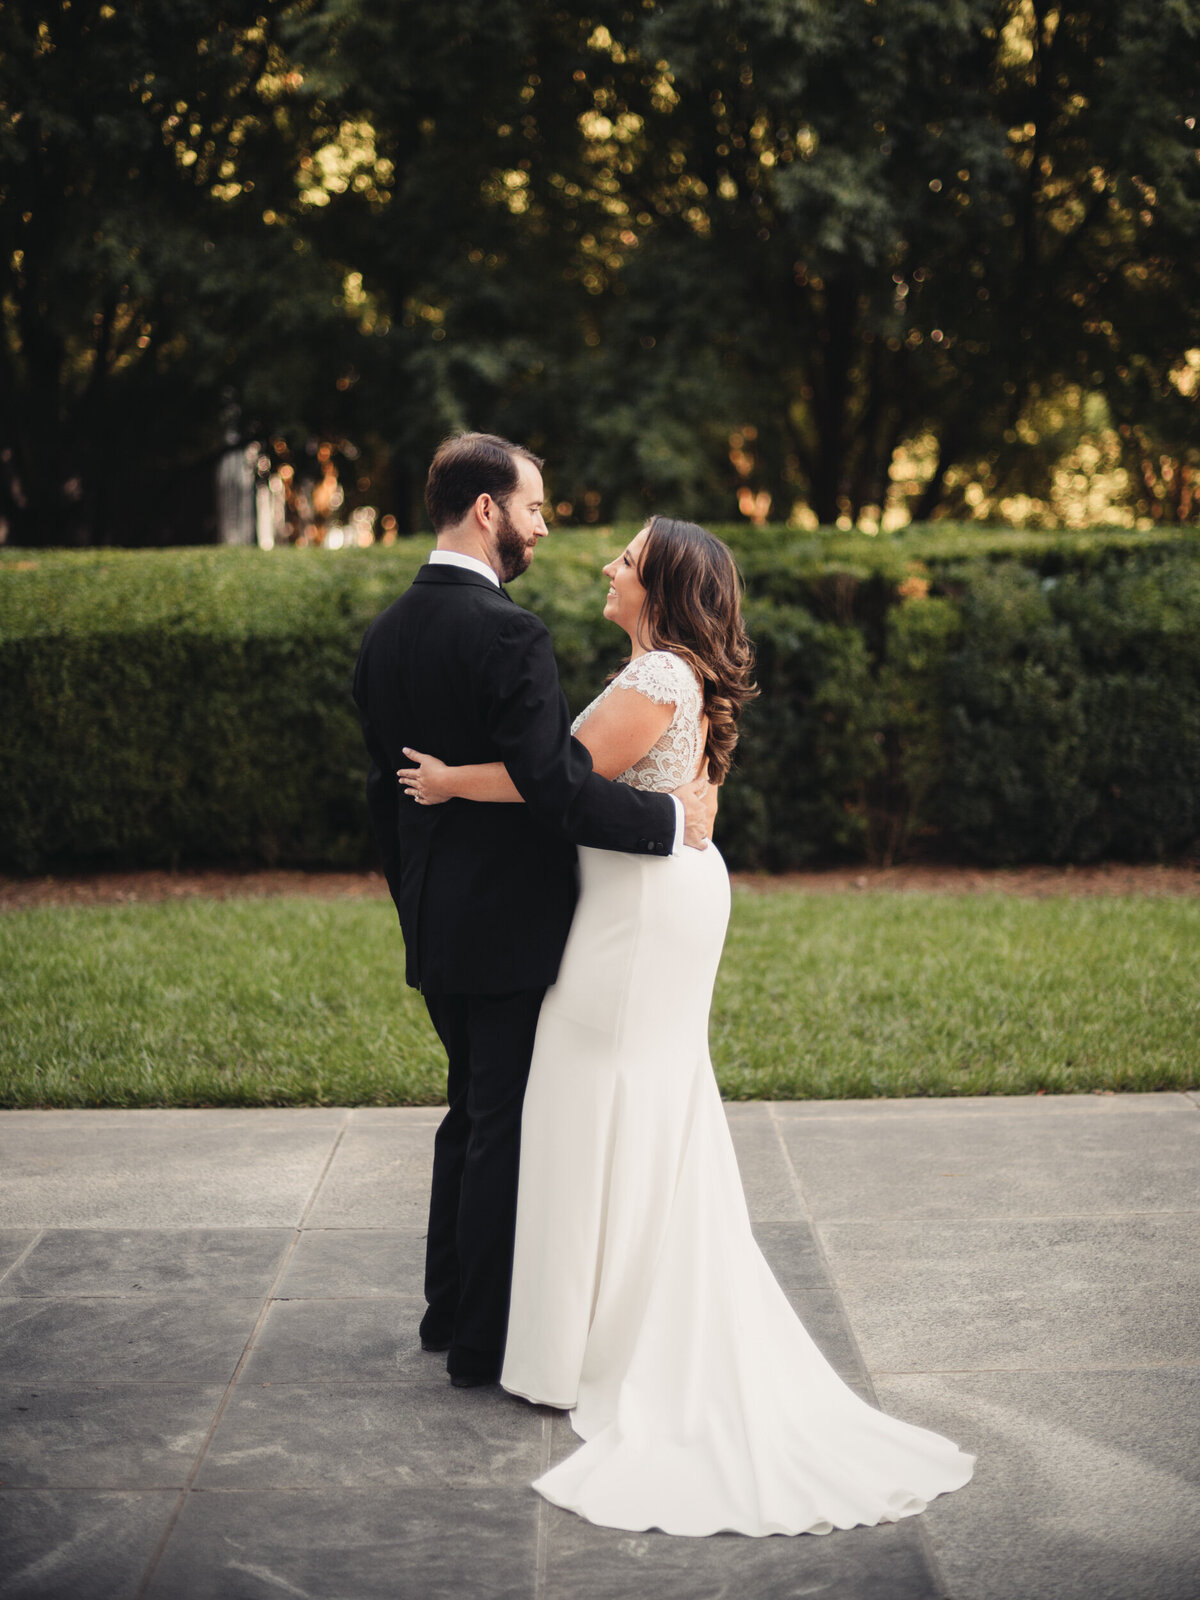 Heart in Hands Photo - Atlanta Wedding Photography-205